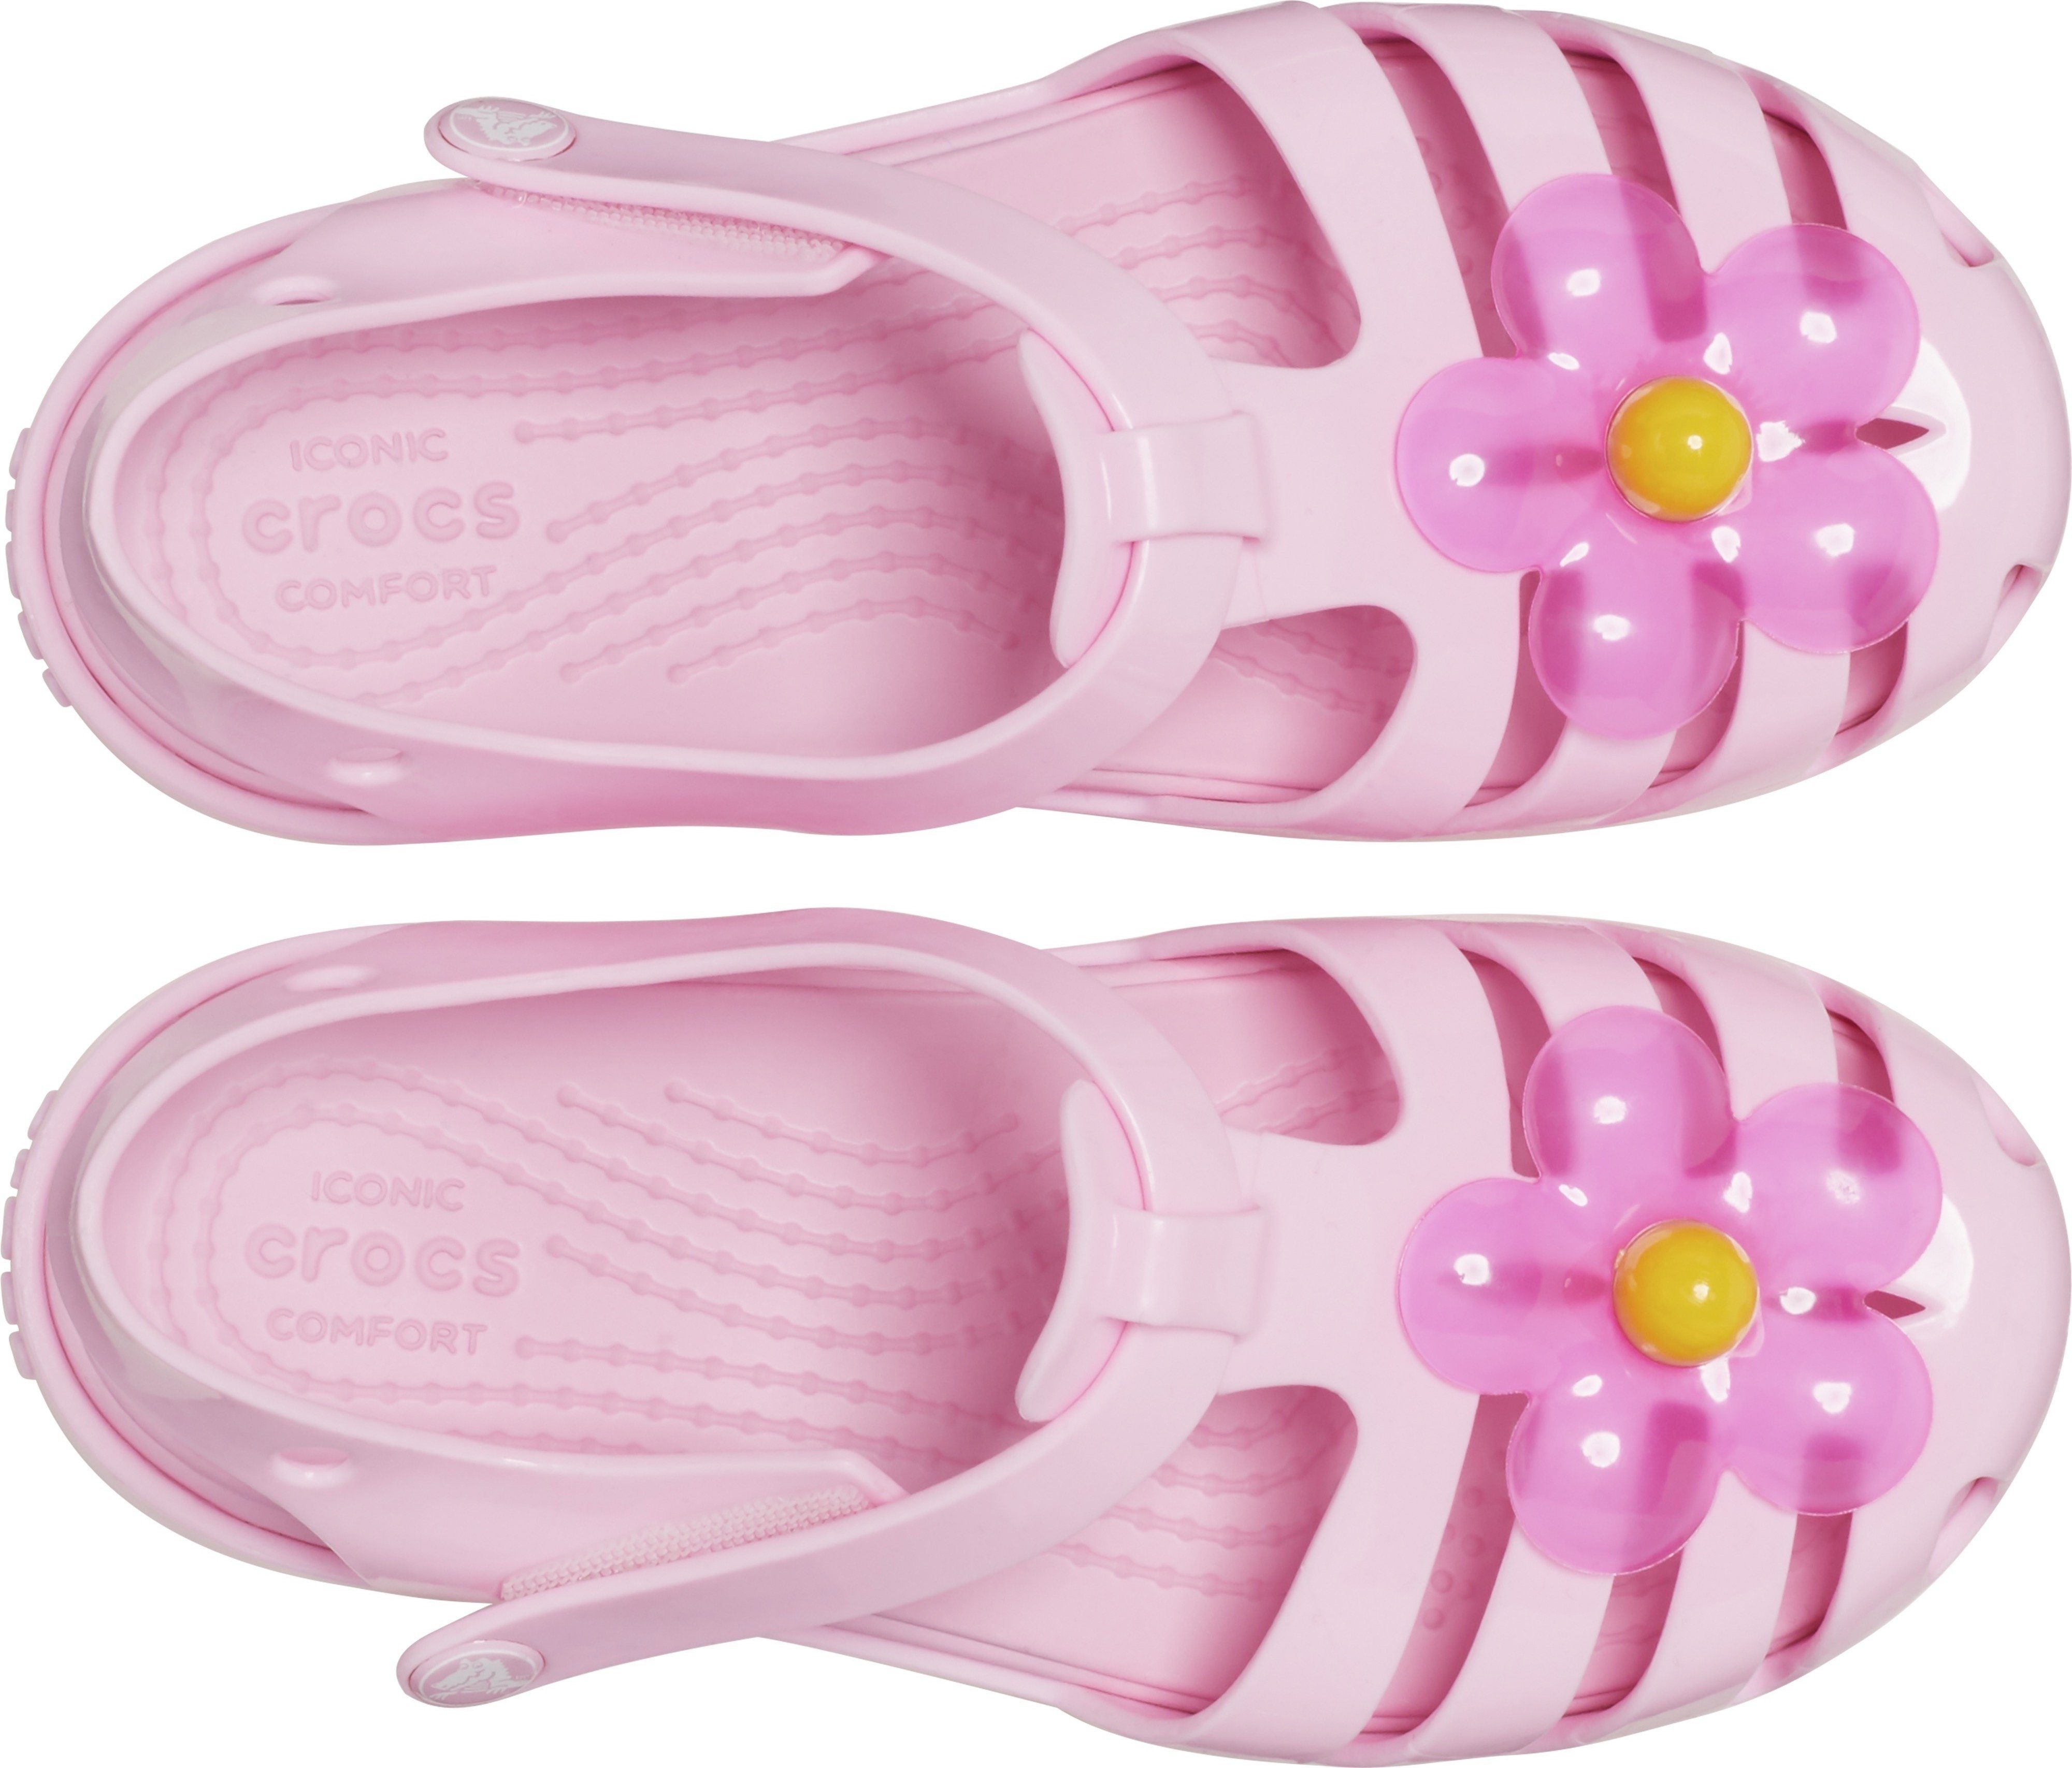 Schnallen Isabella Crocs mit Sandal T rosa-Flamingo Badeschuh verstellbaren